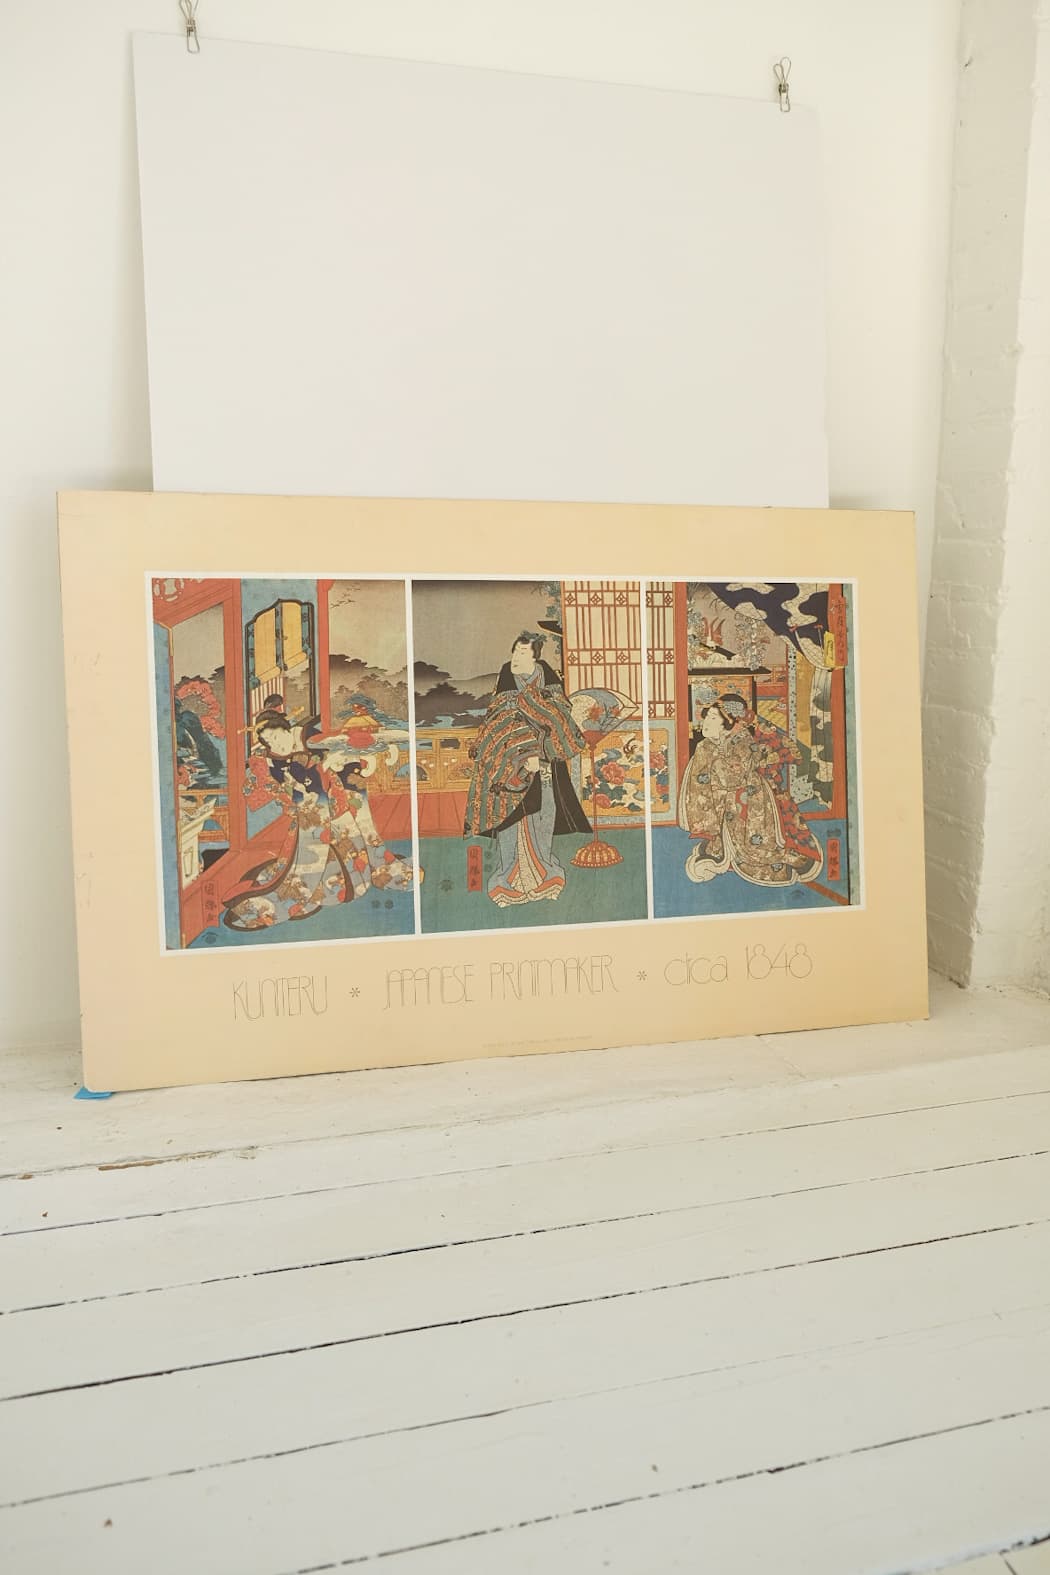 Kuniteru Japanese Print Maker Circa 1848 Poster